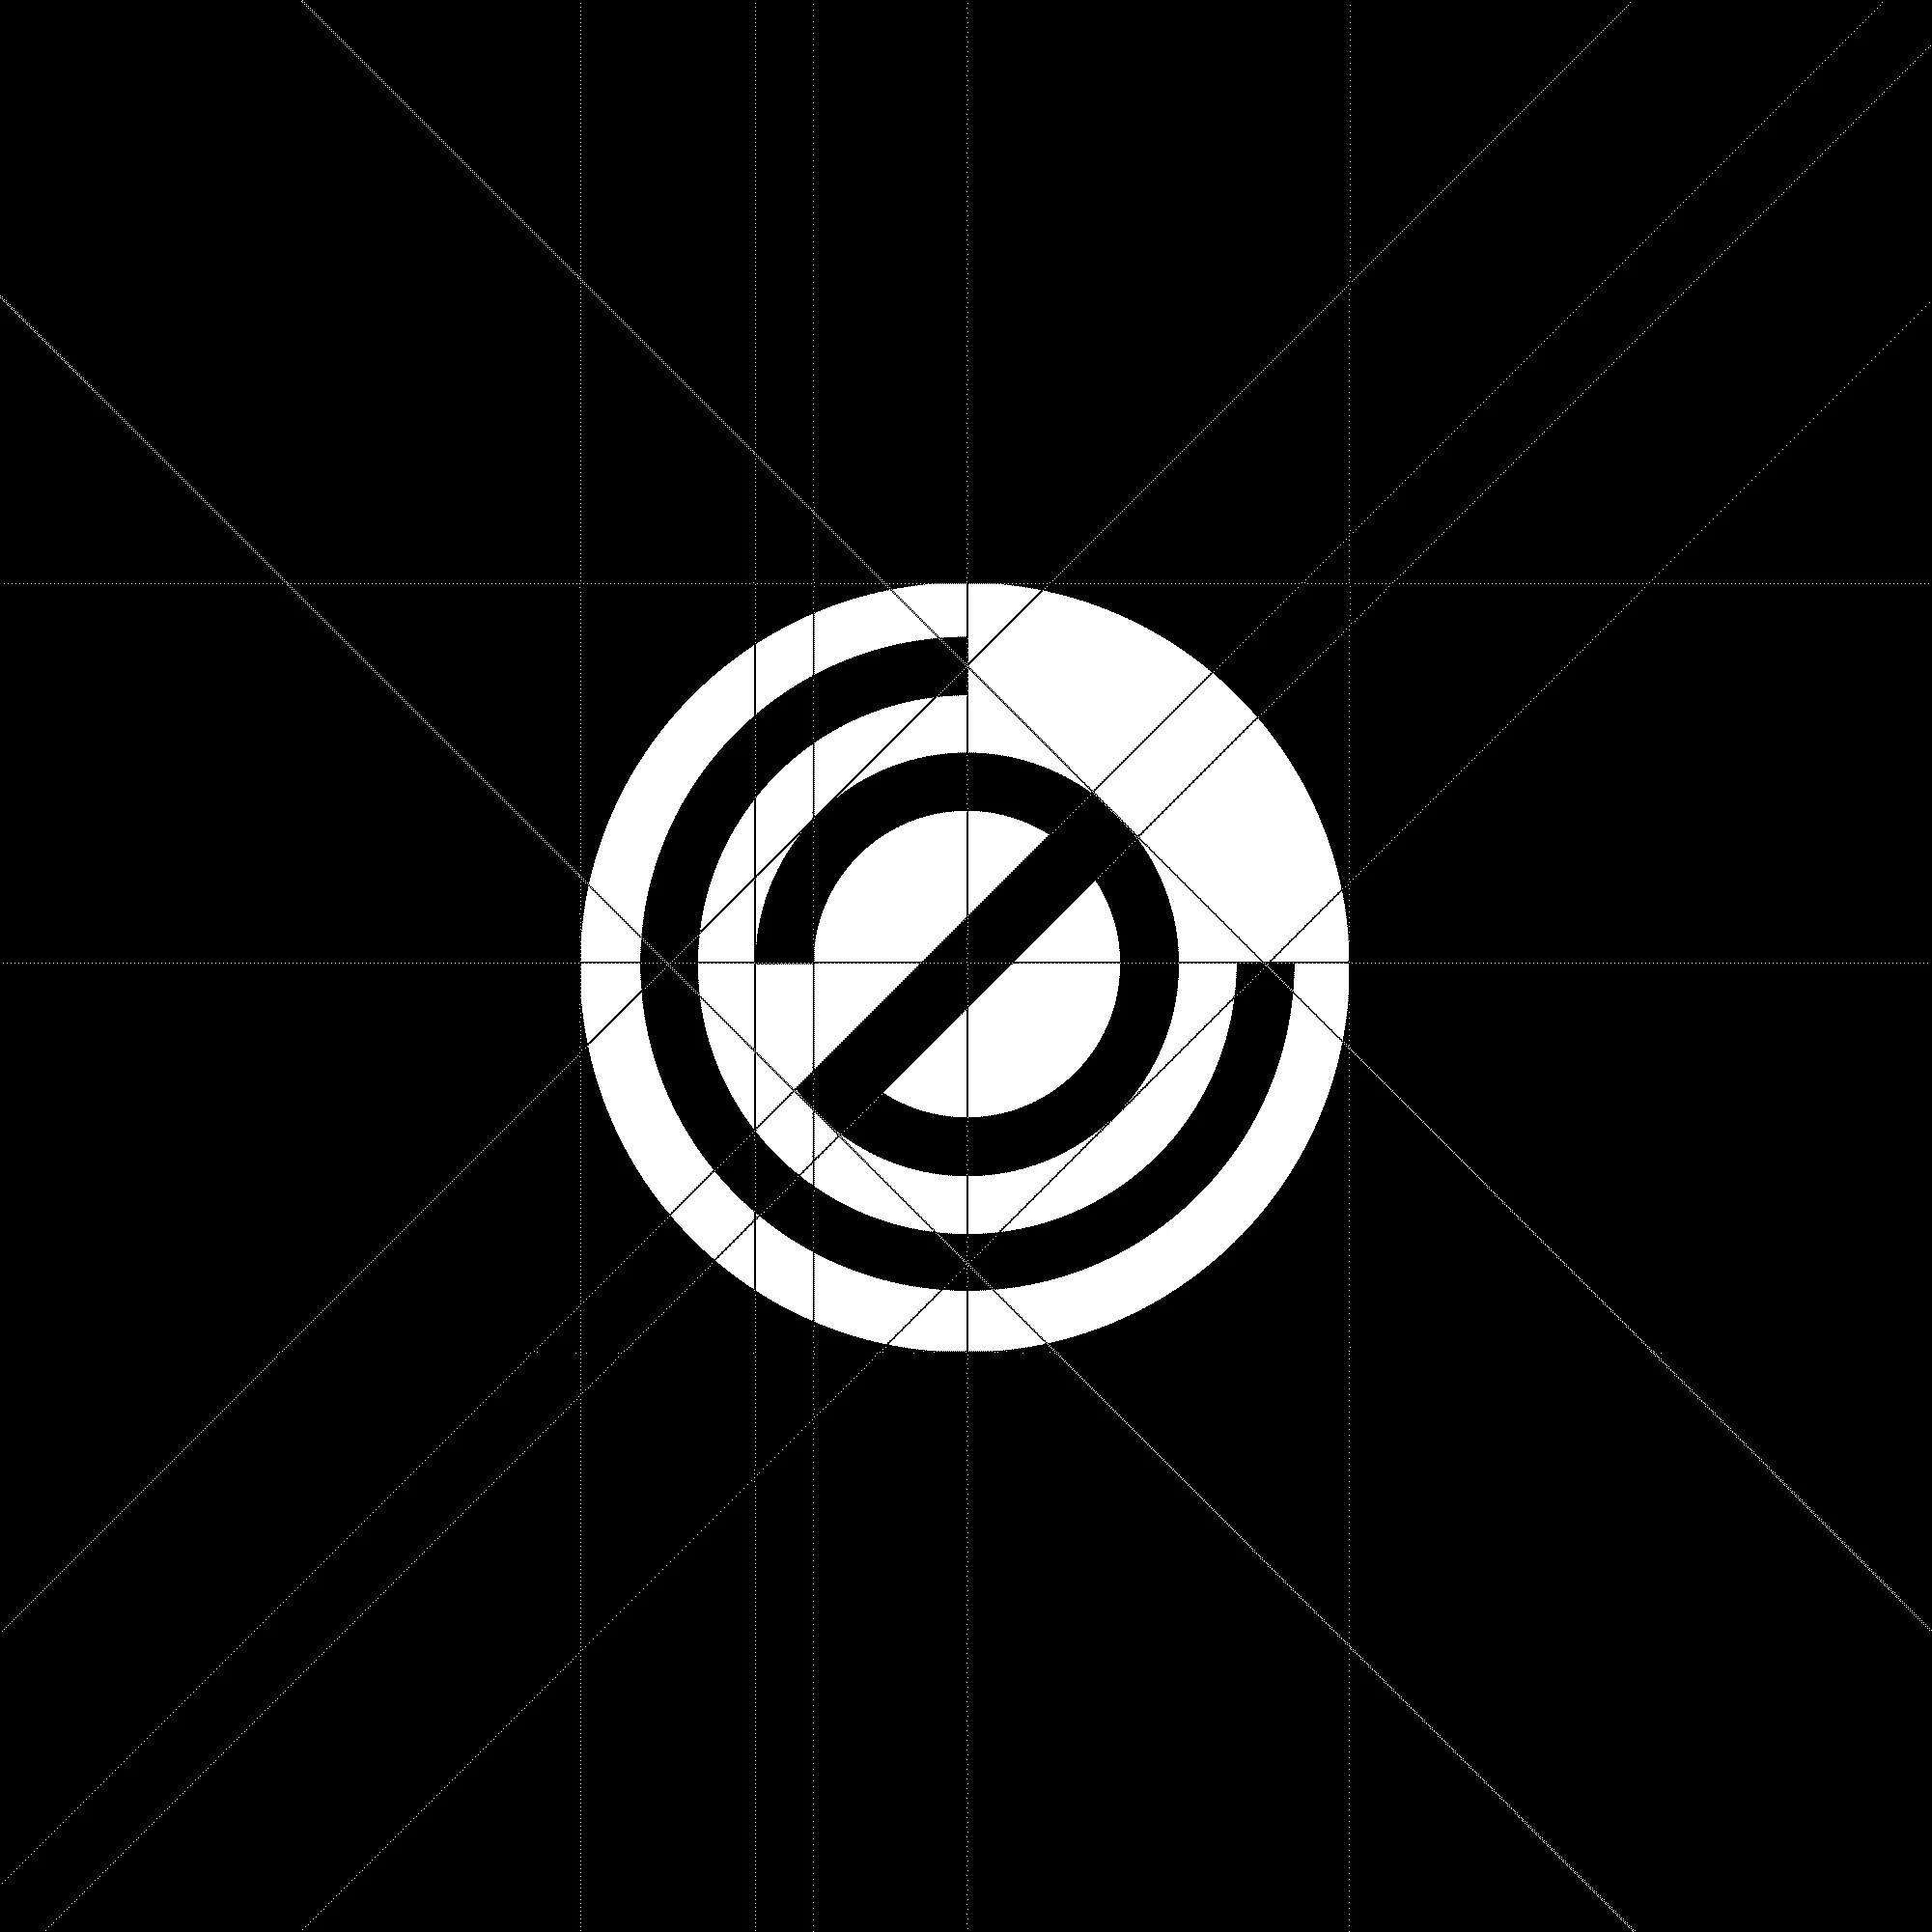 Branding logo design lettering in circle, black and white grid